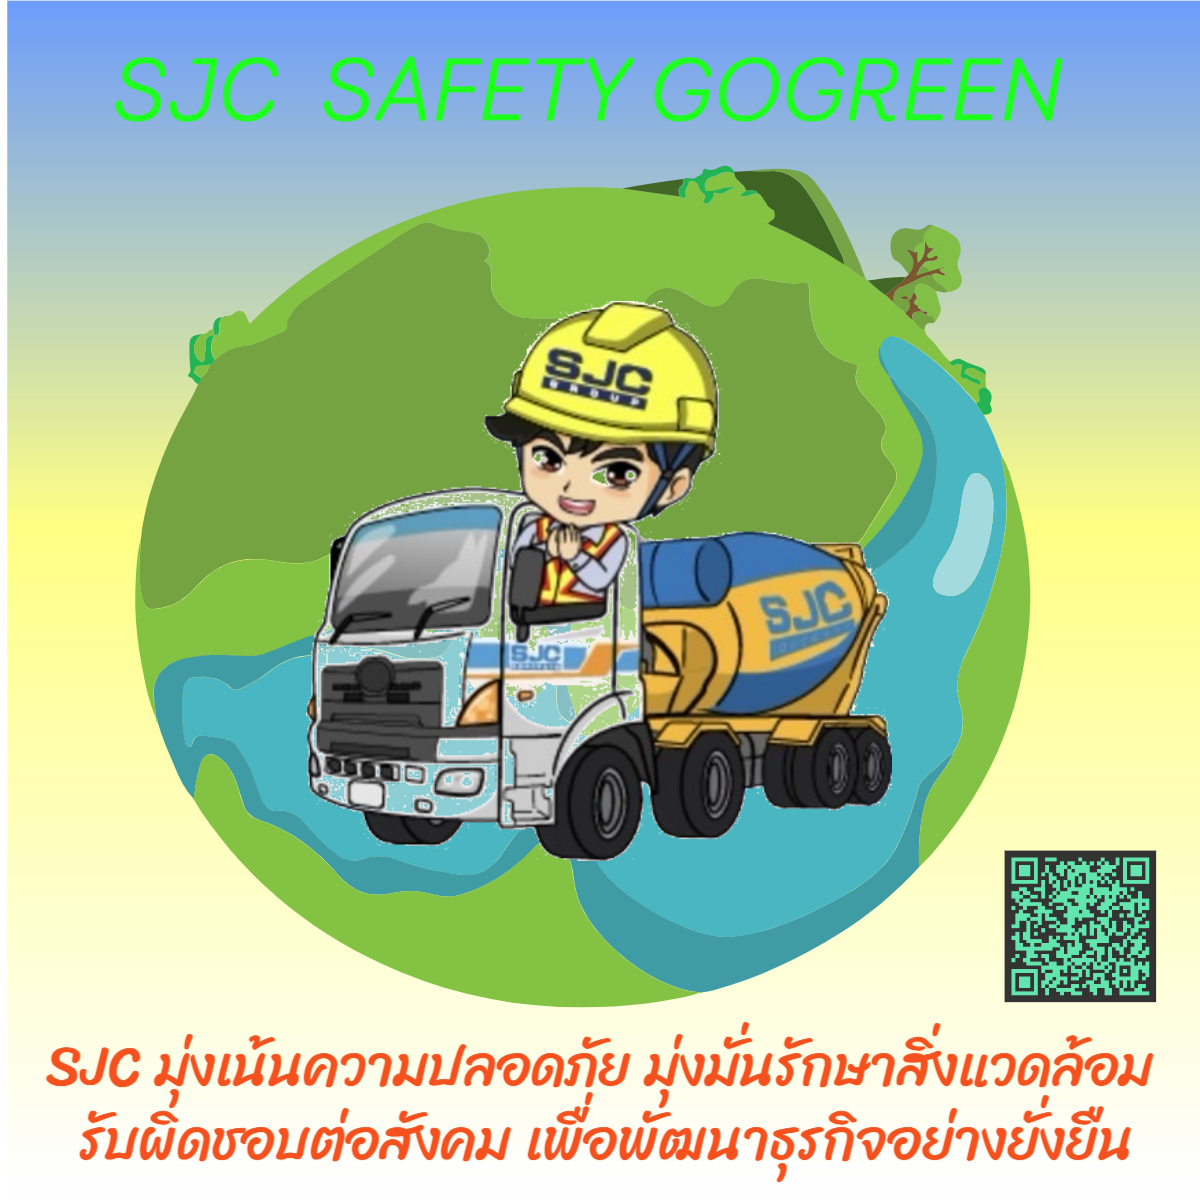 SJC SAFETY GOGREEN